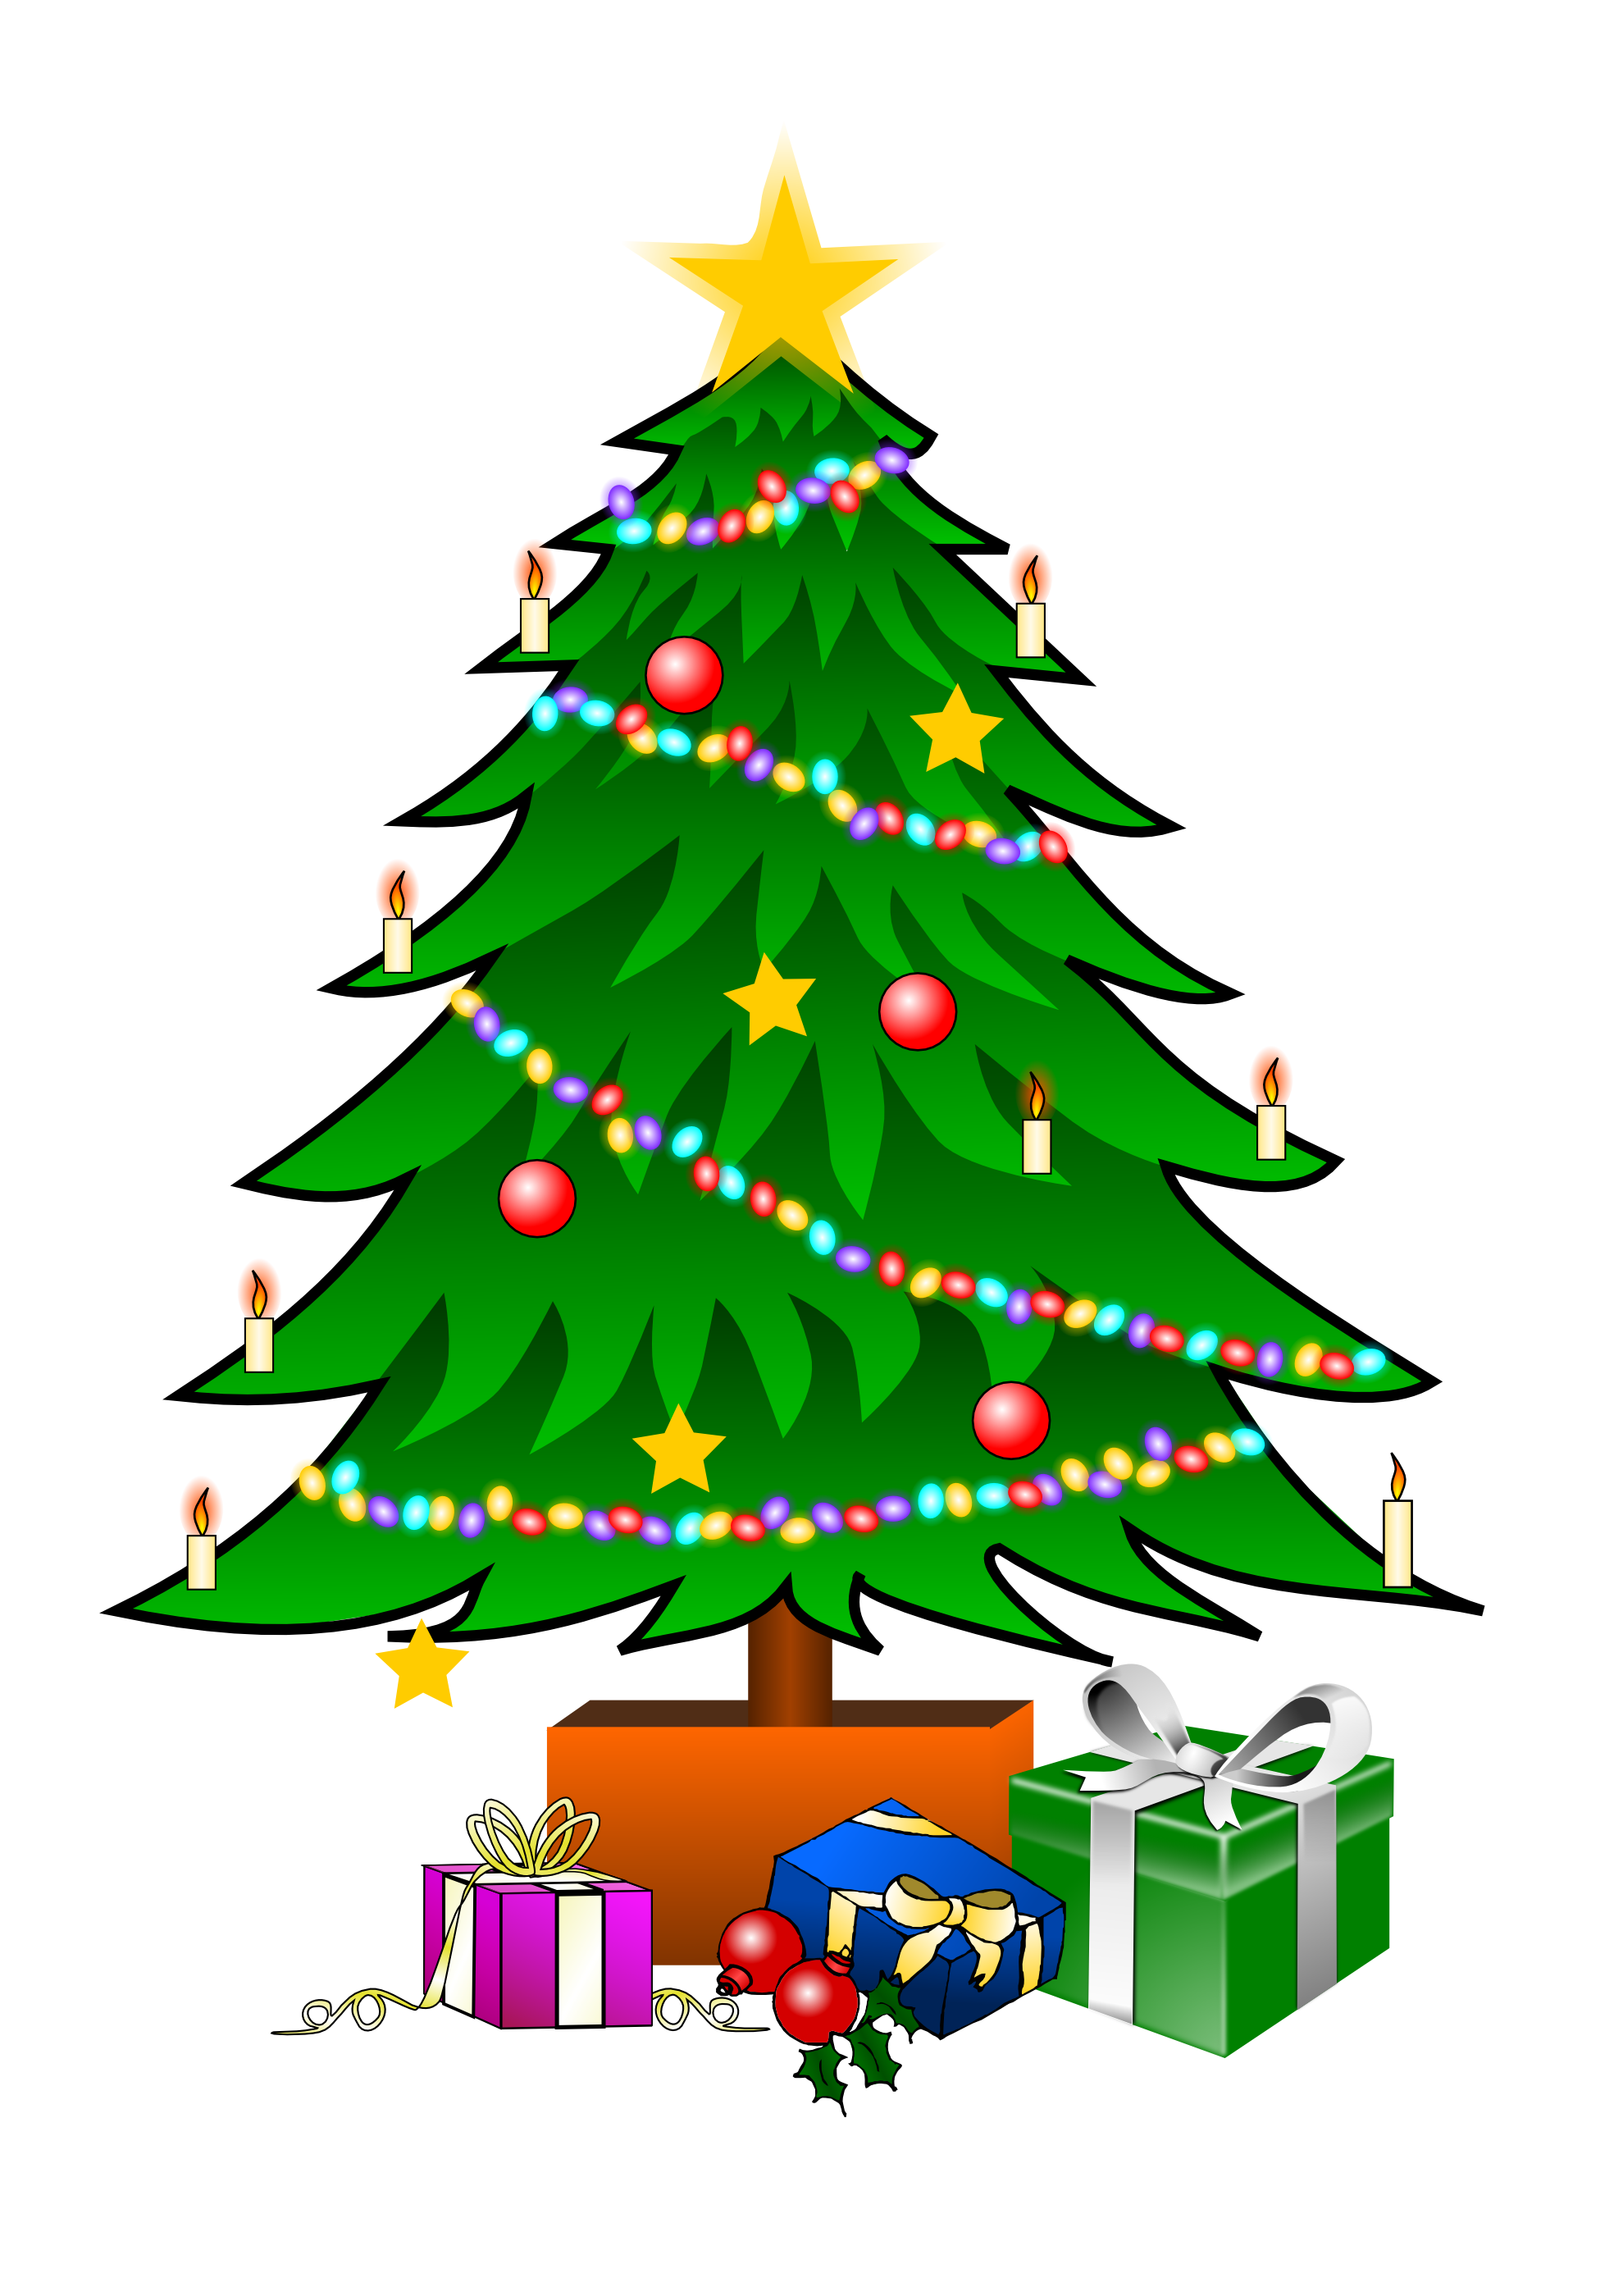 Christmas tree clip art. December clipart holiday season